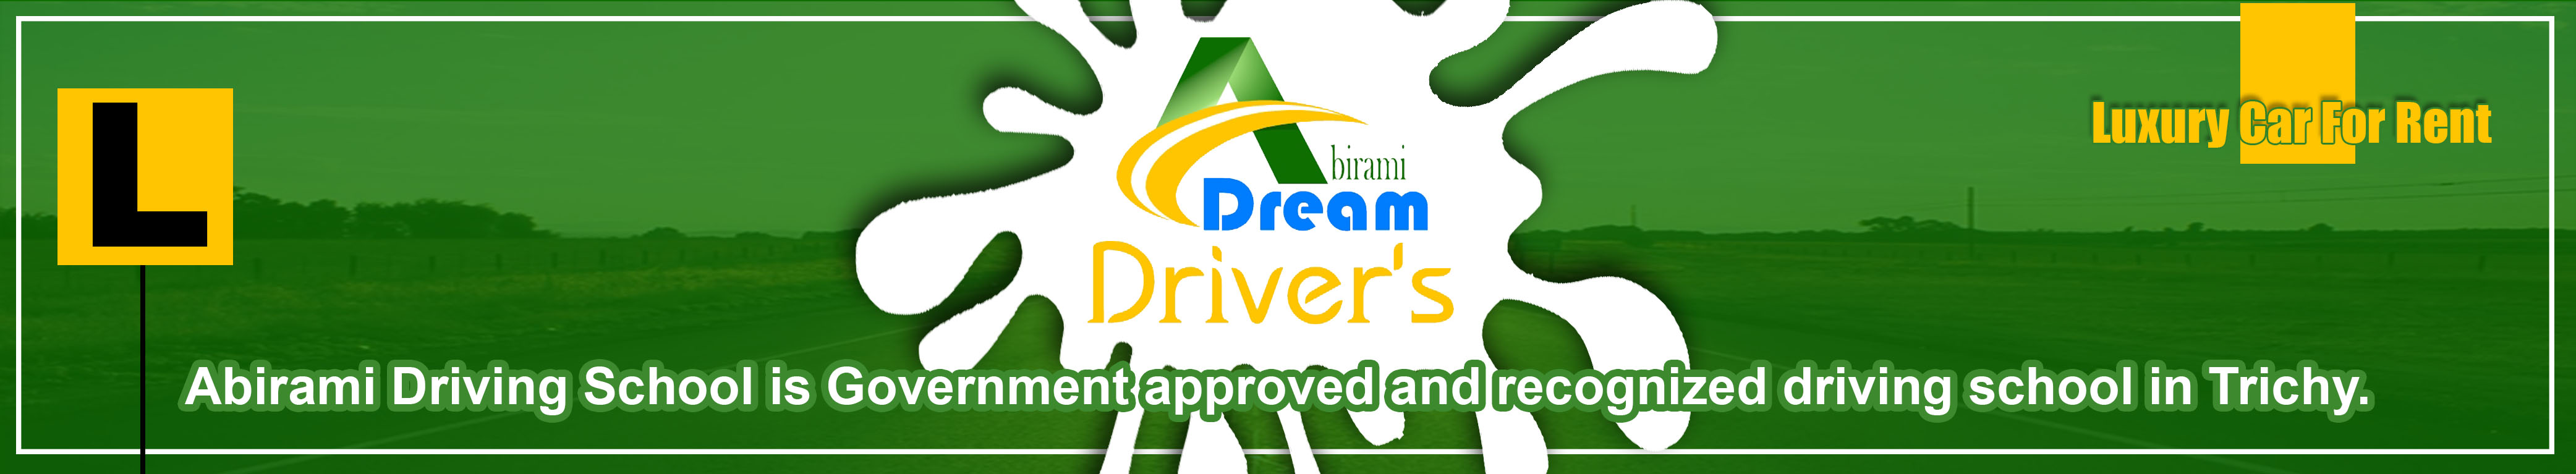 Abirami Driving School Banner Image